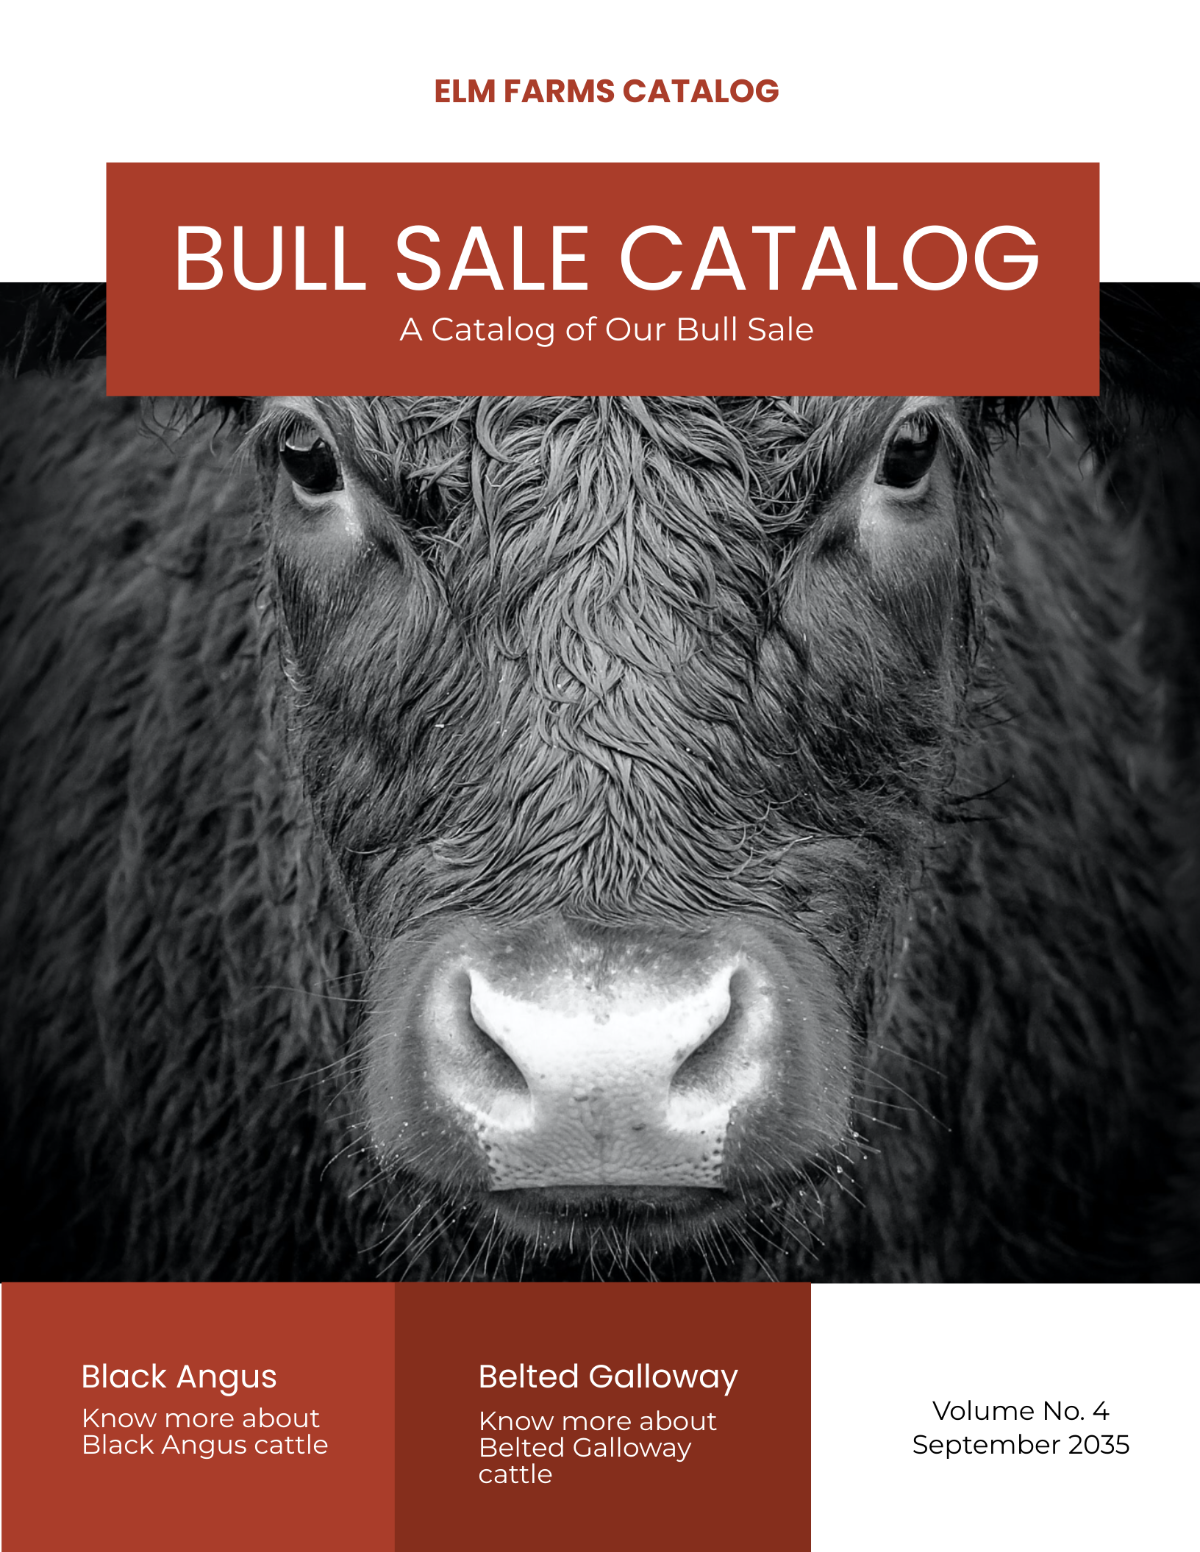 Bull Sale Catalog